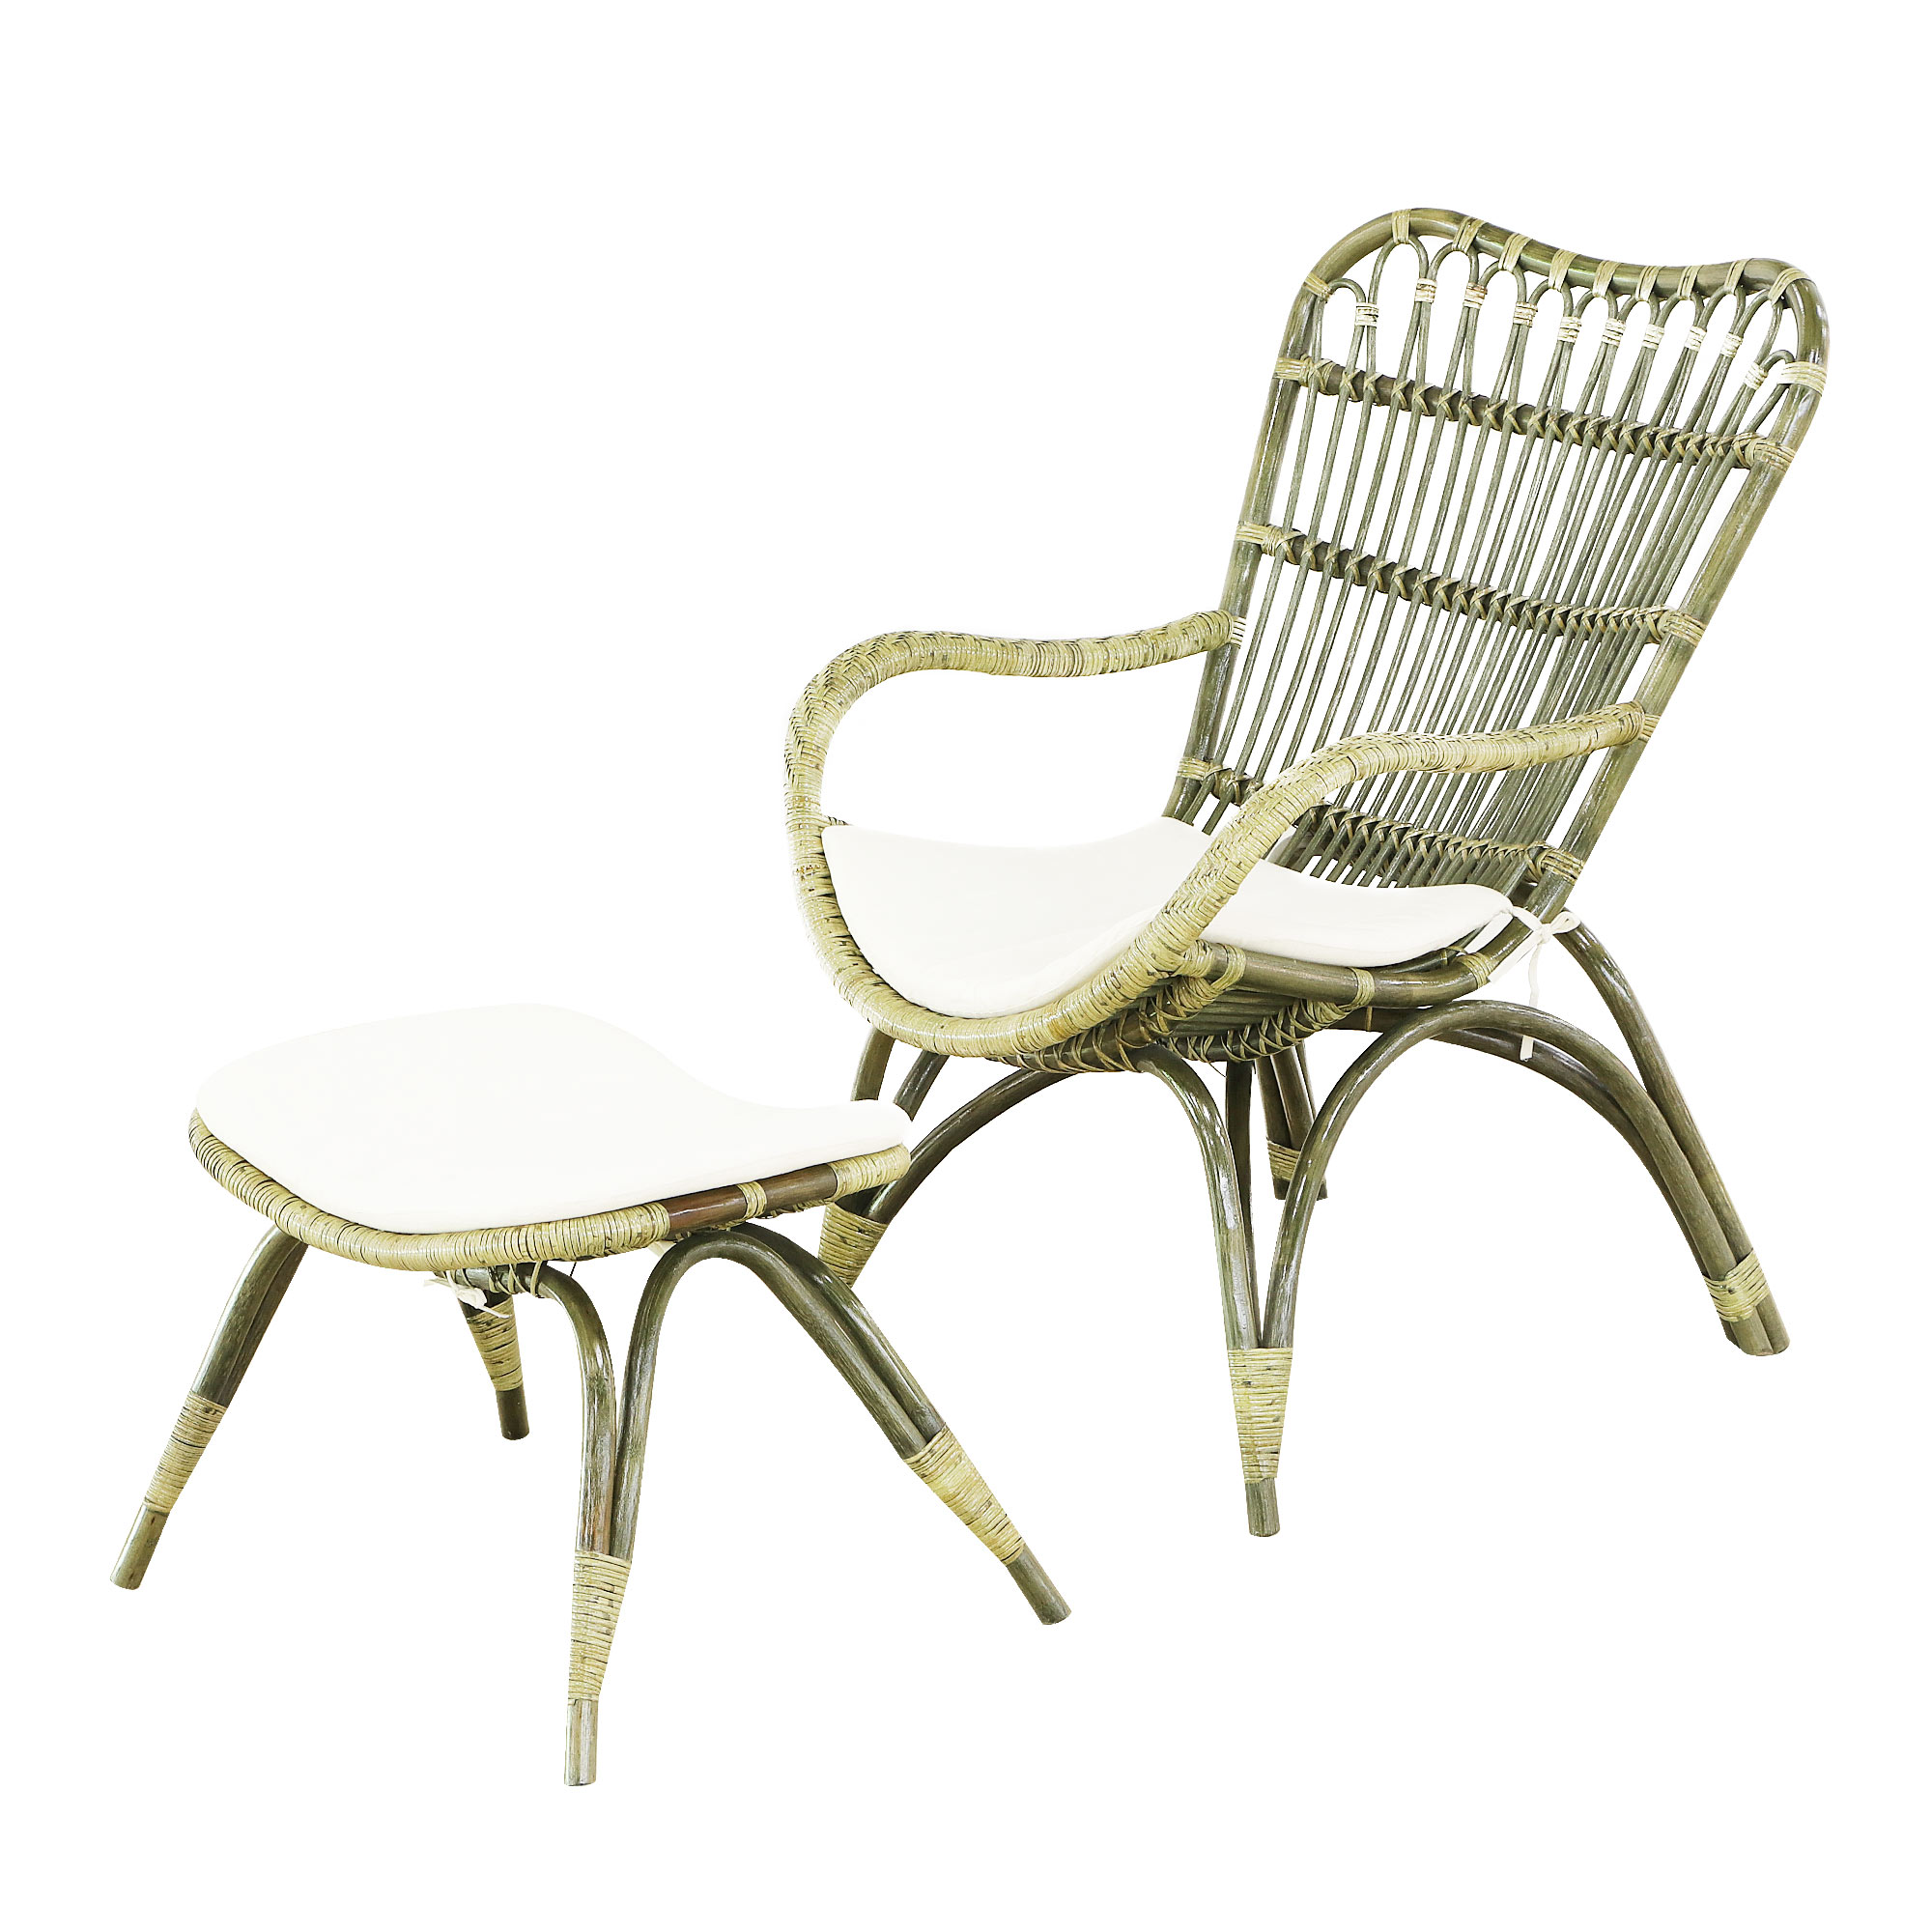 Комплект Rattan grand: кресло, оттоманка lounge olive, цвет оливковый - фото 1